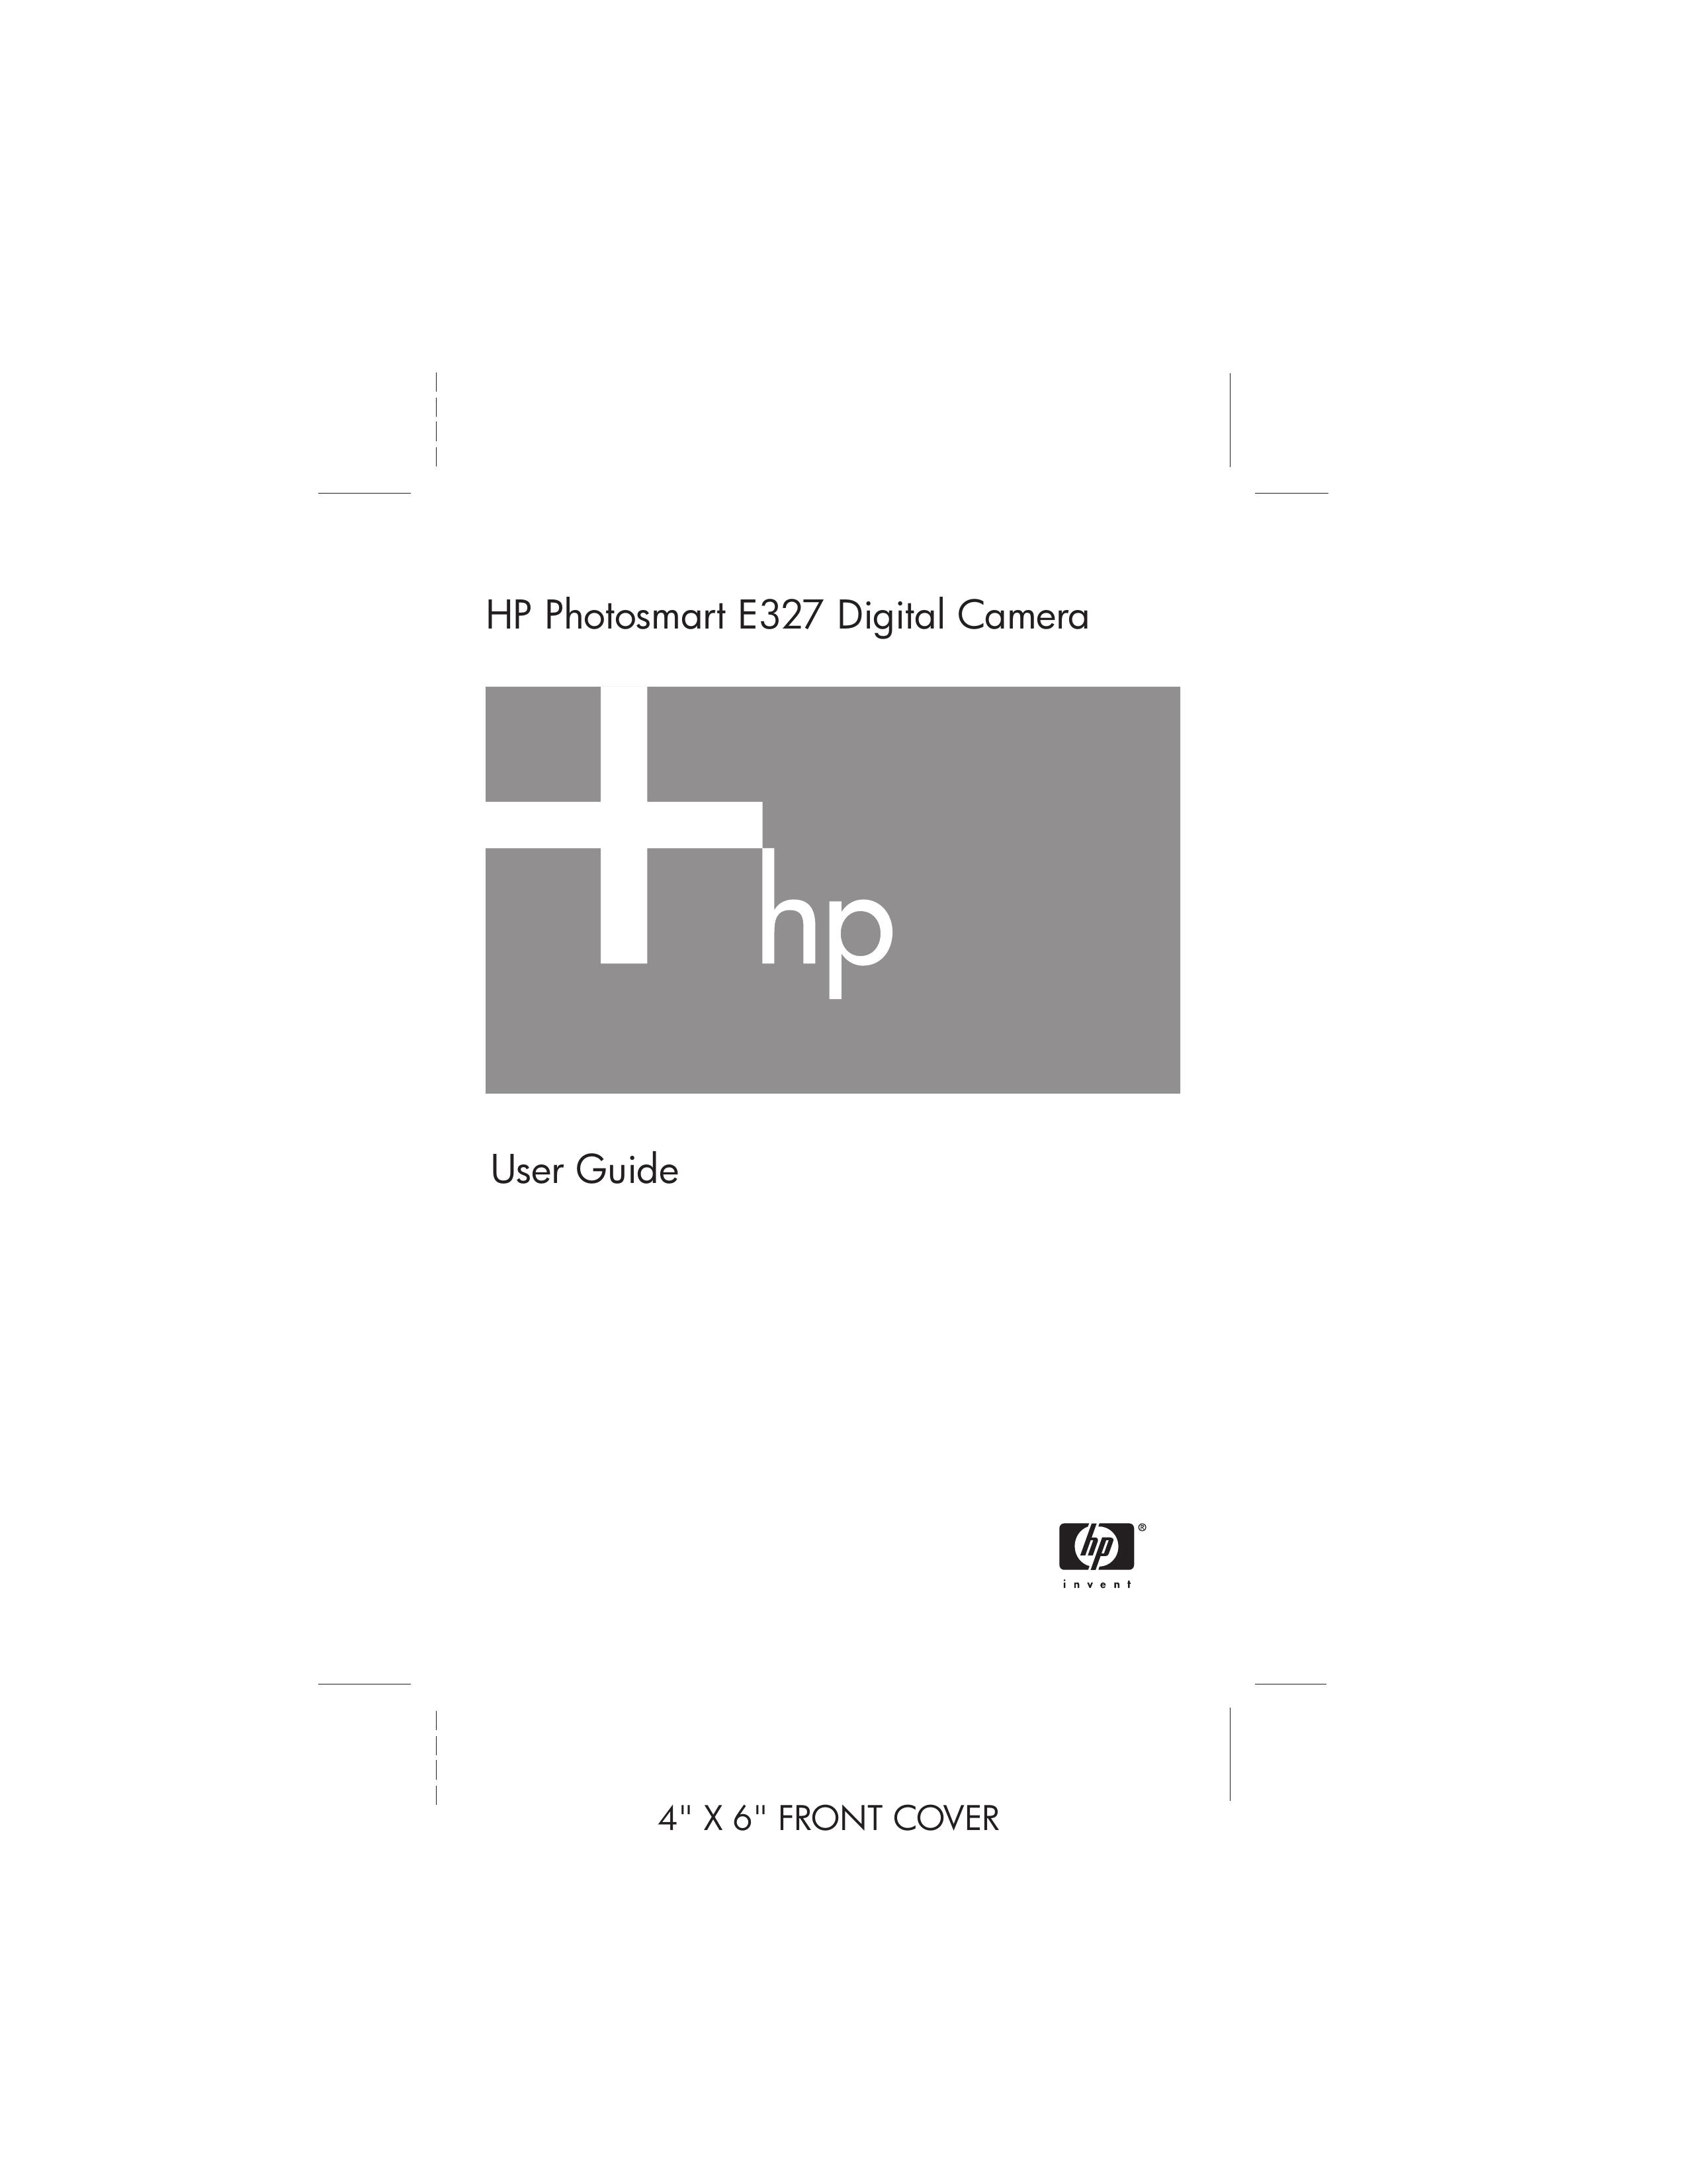 HP (Hewlett-Packard) E327 Digital Camera User Manual